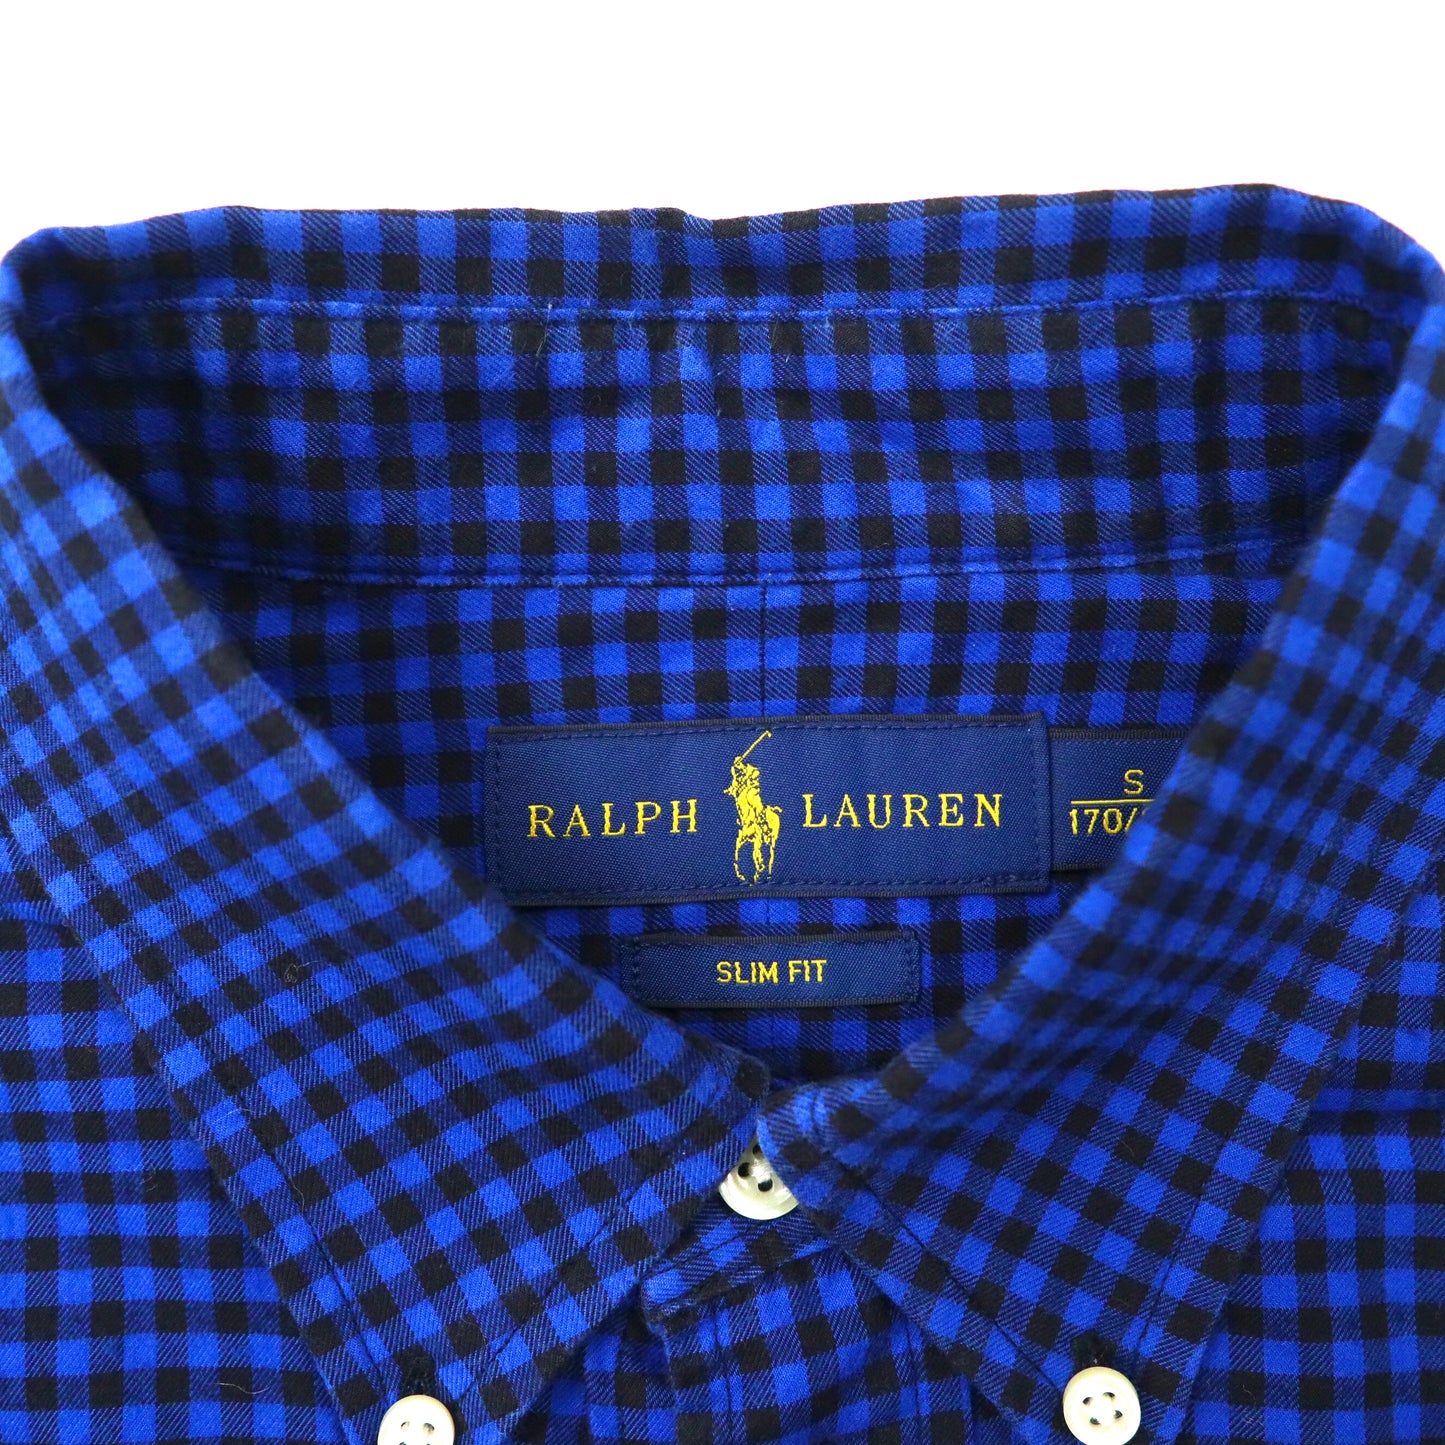 RALPH LAUREN ボタンダウンシャツ 170 ブルー チェック コットン SLIM FIT スモールポニー刺繍